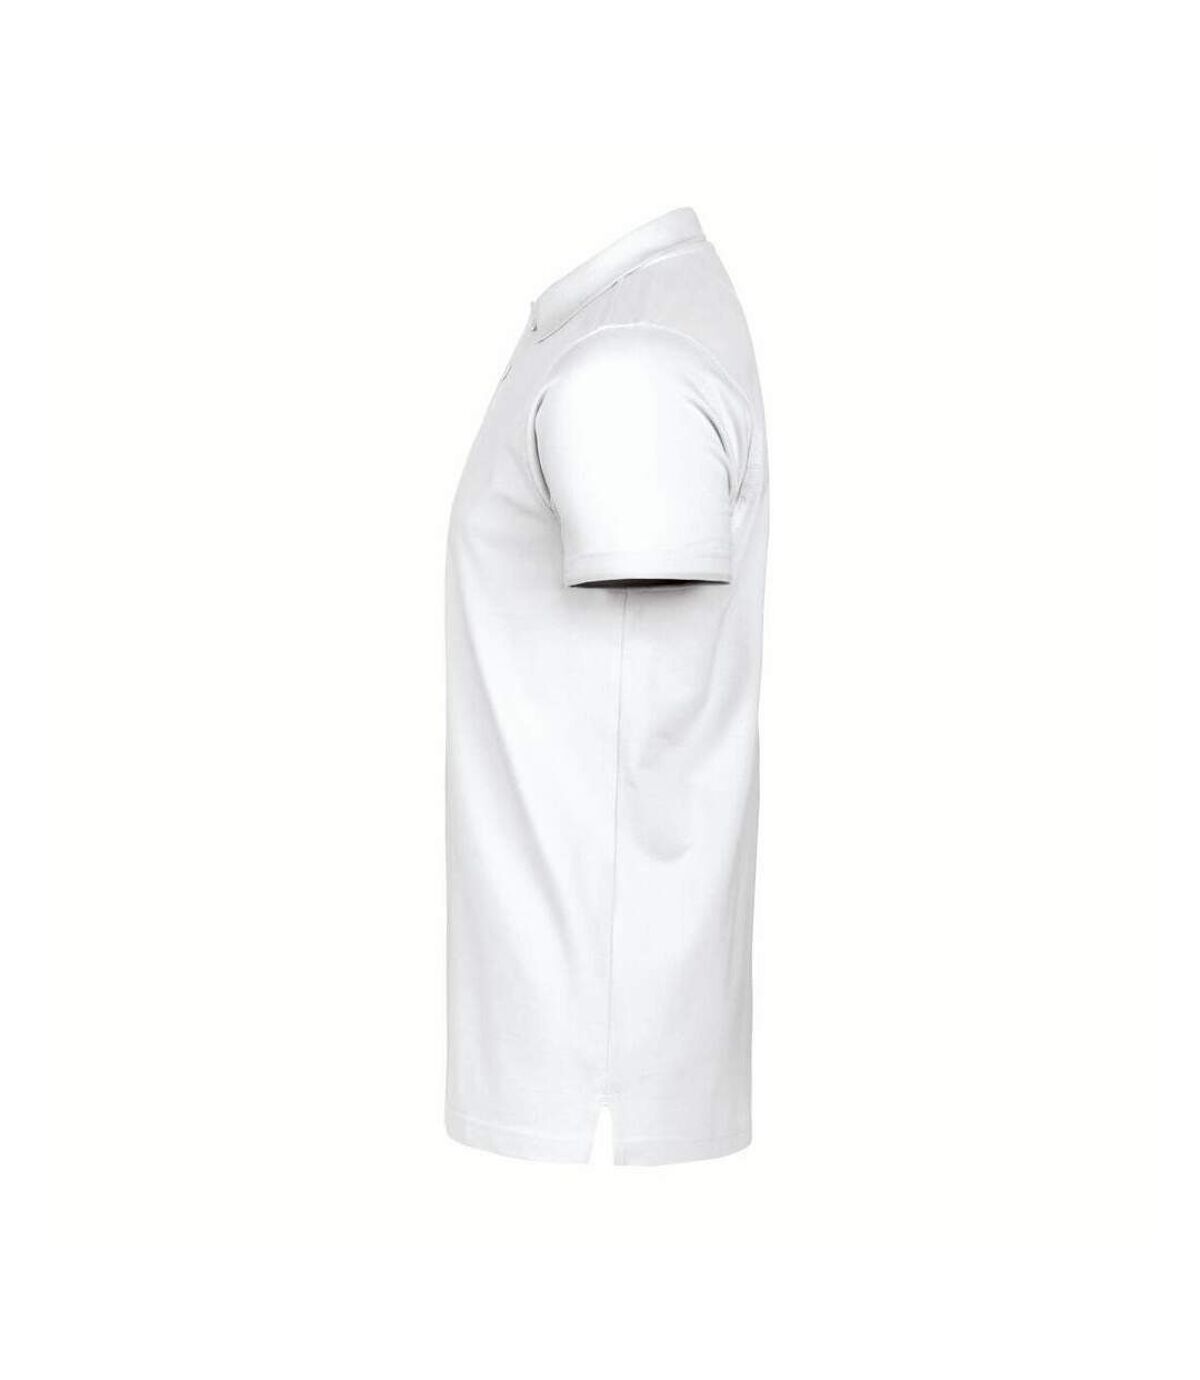 Printer Mens Surf RSX Polo Shirt (White)